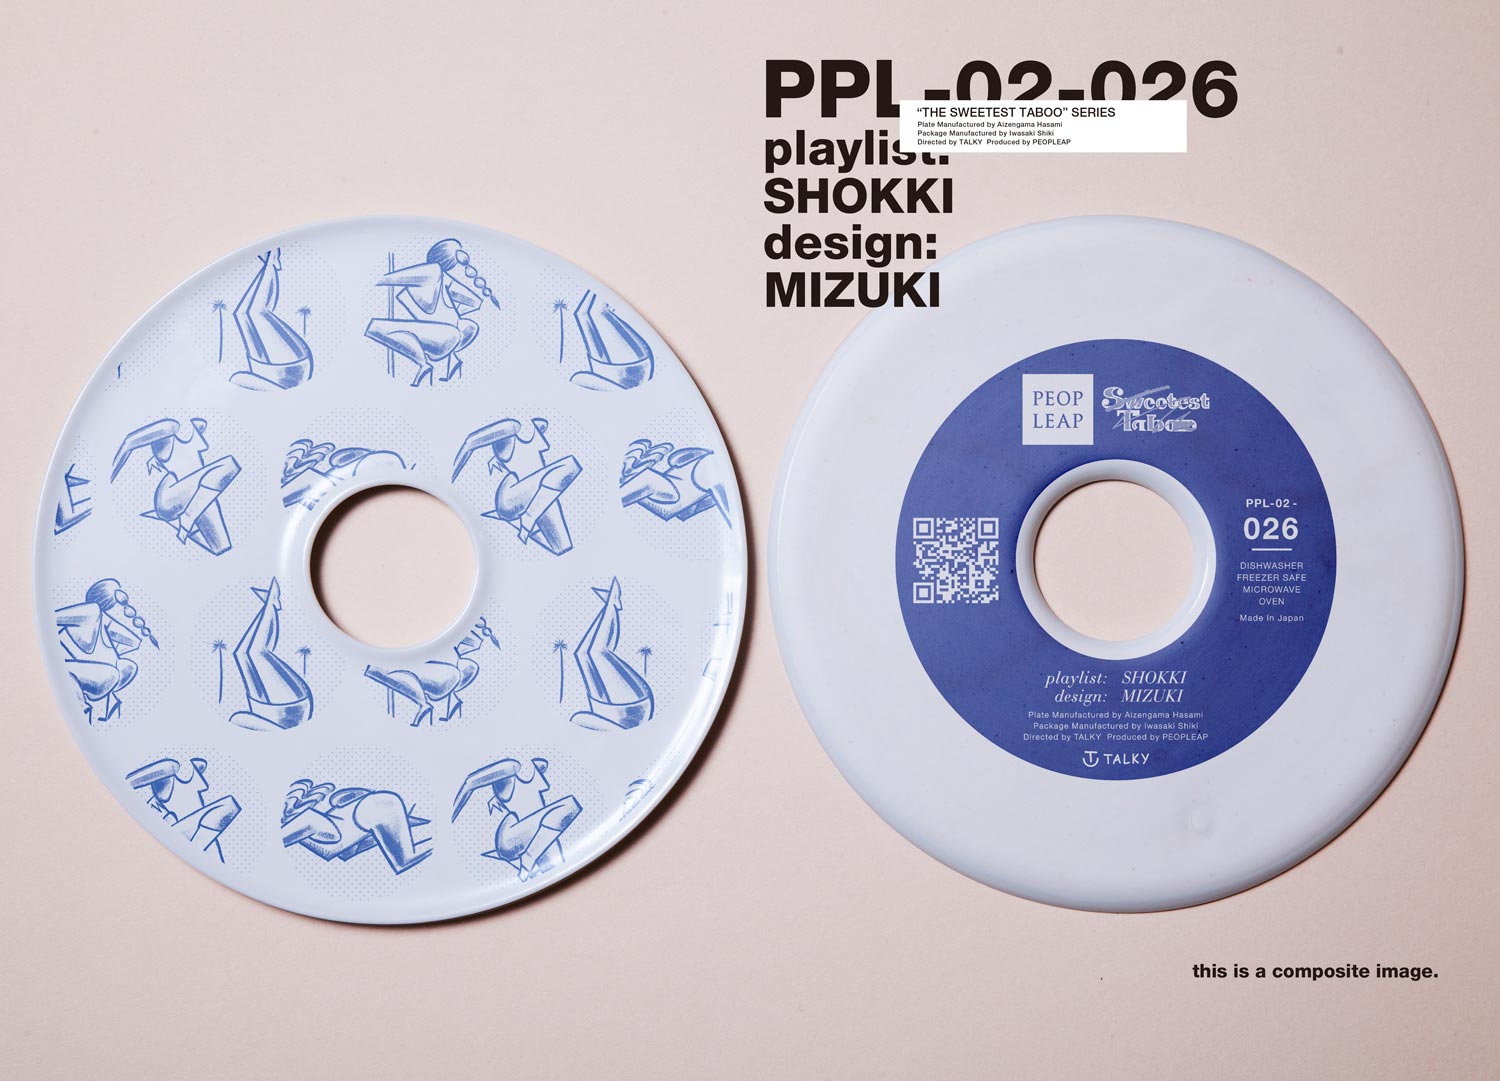 PPL-02-026 / SHOKKI / MIZUKI